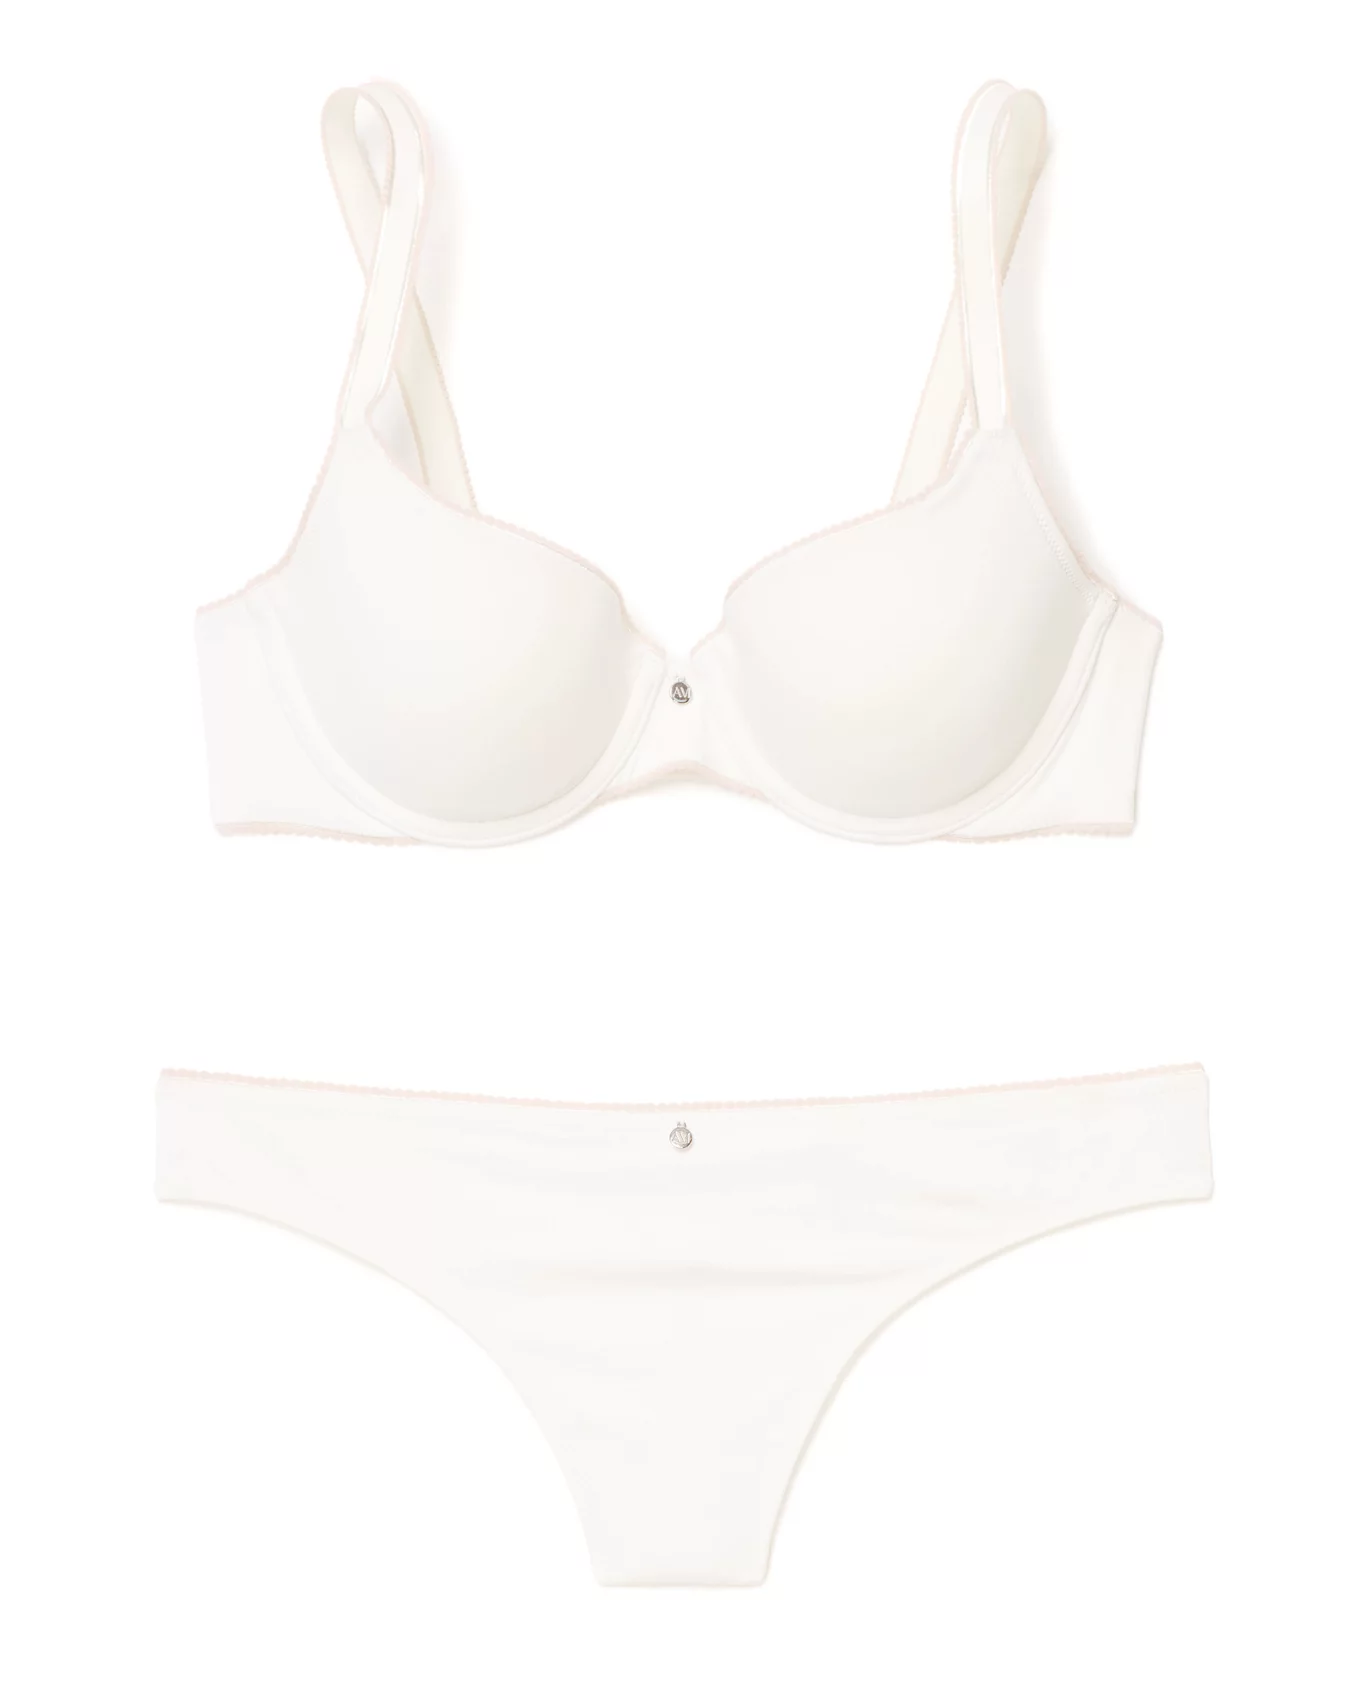 White Cotton Underwear Set for Woman, White Comfortable Cotton Lingerie,  Cotton Bra and Panty Set 